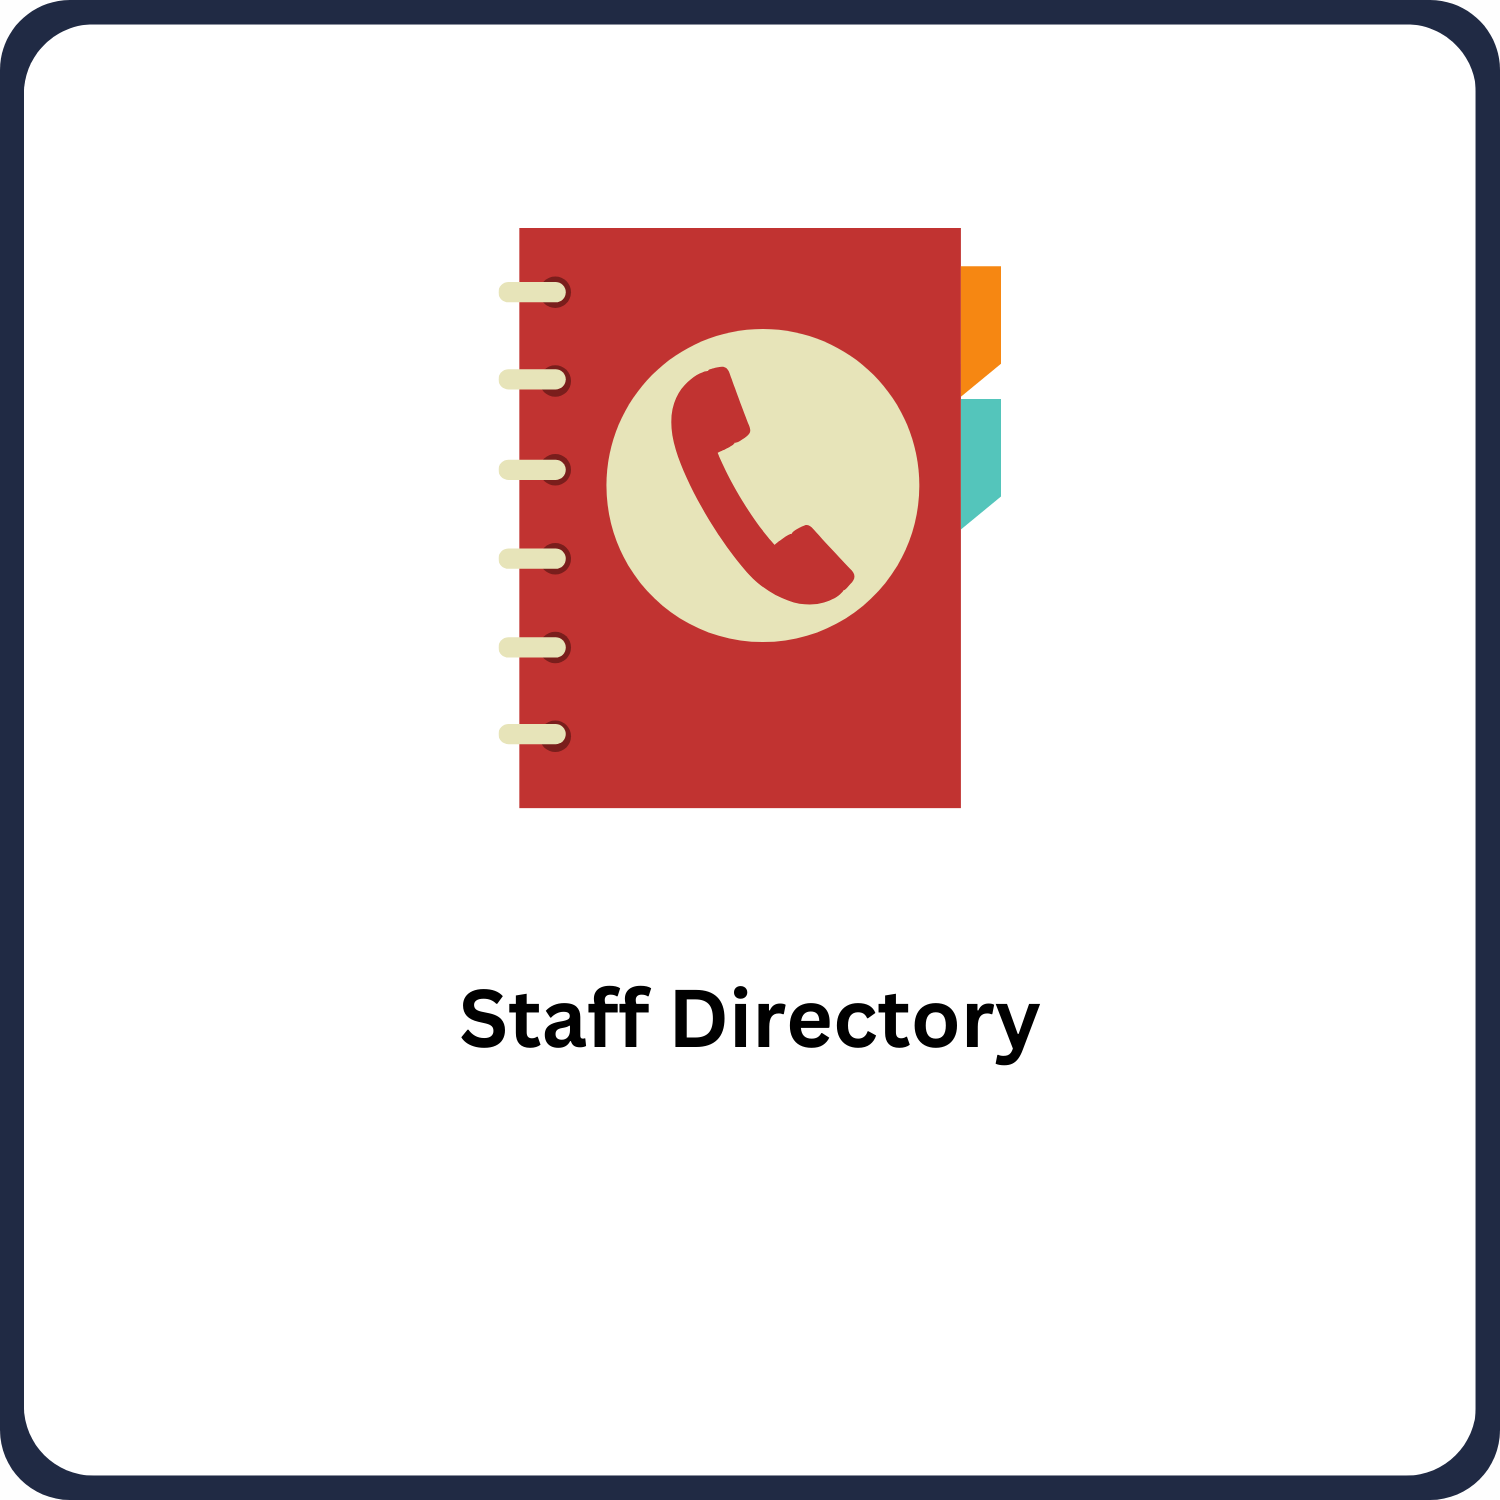 Staff Directory